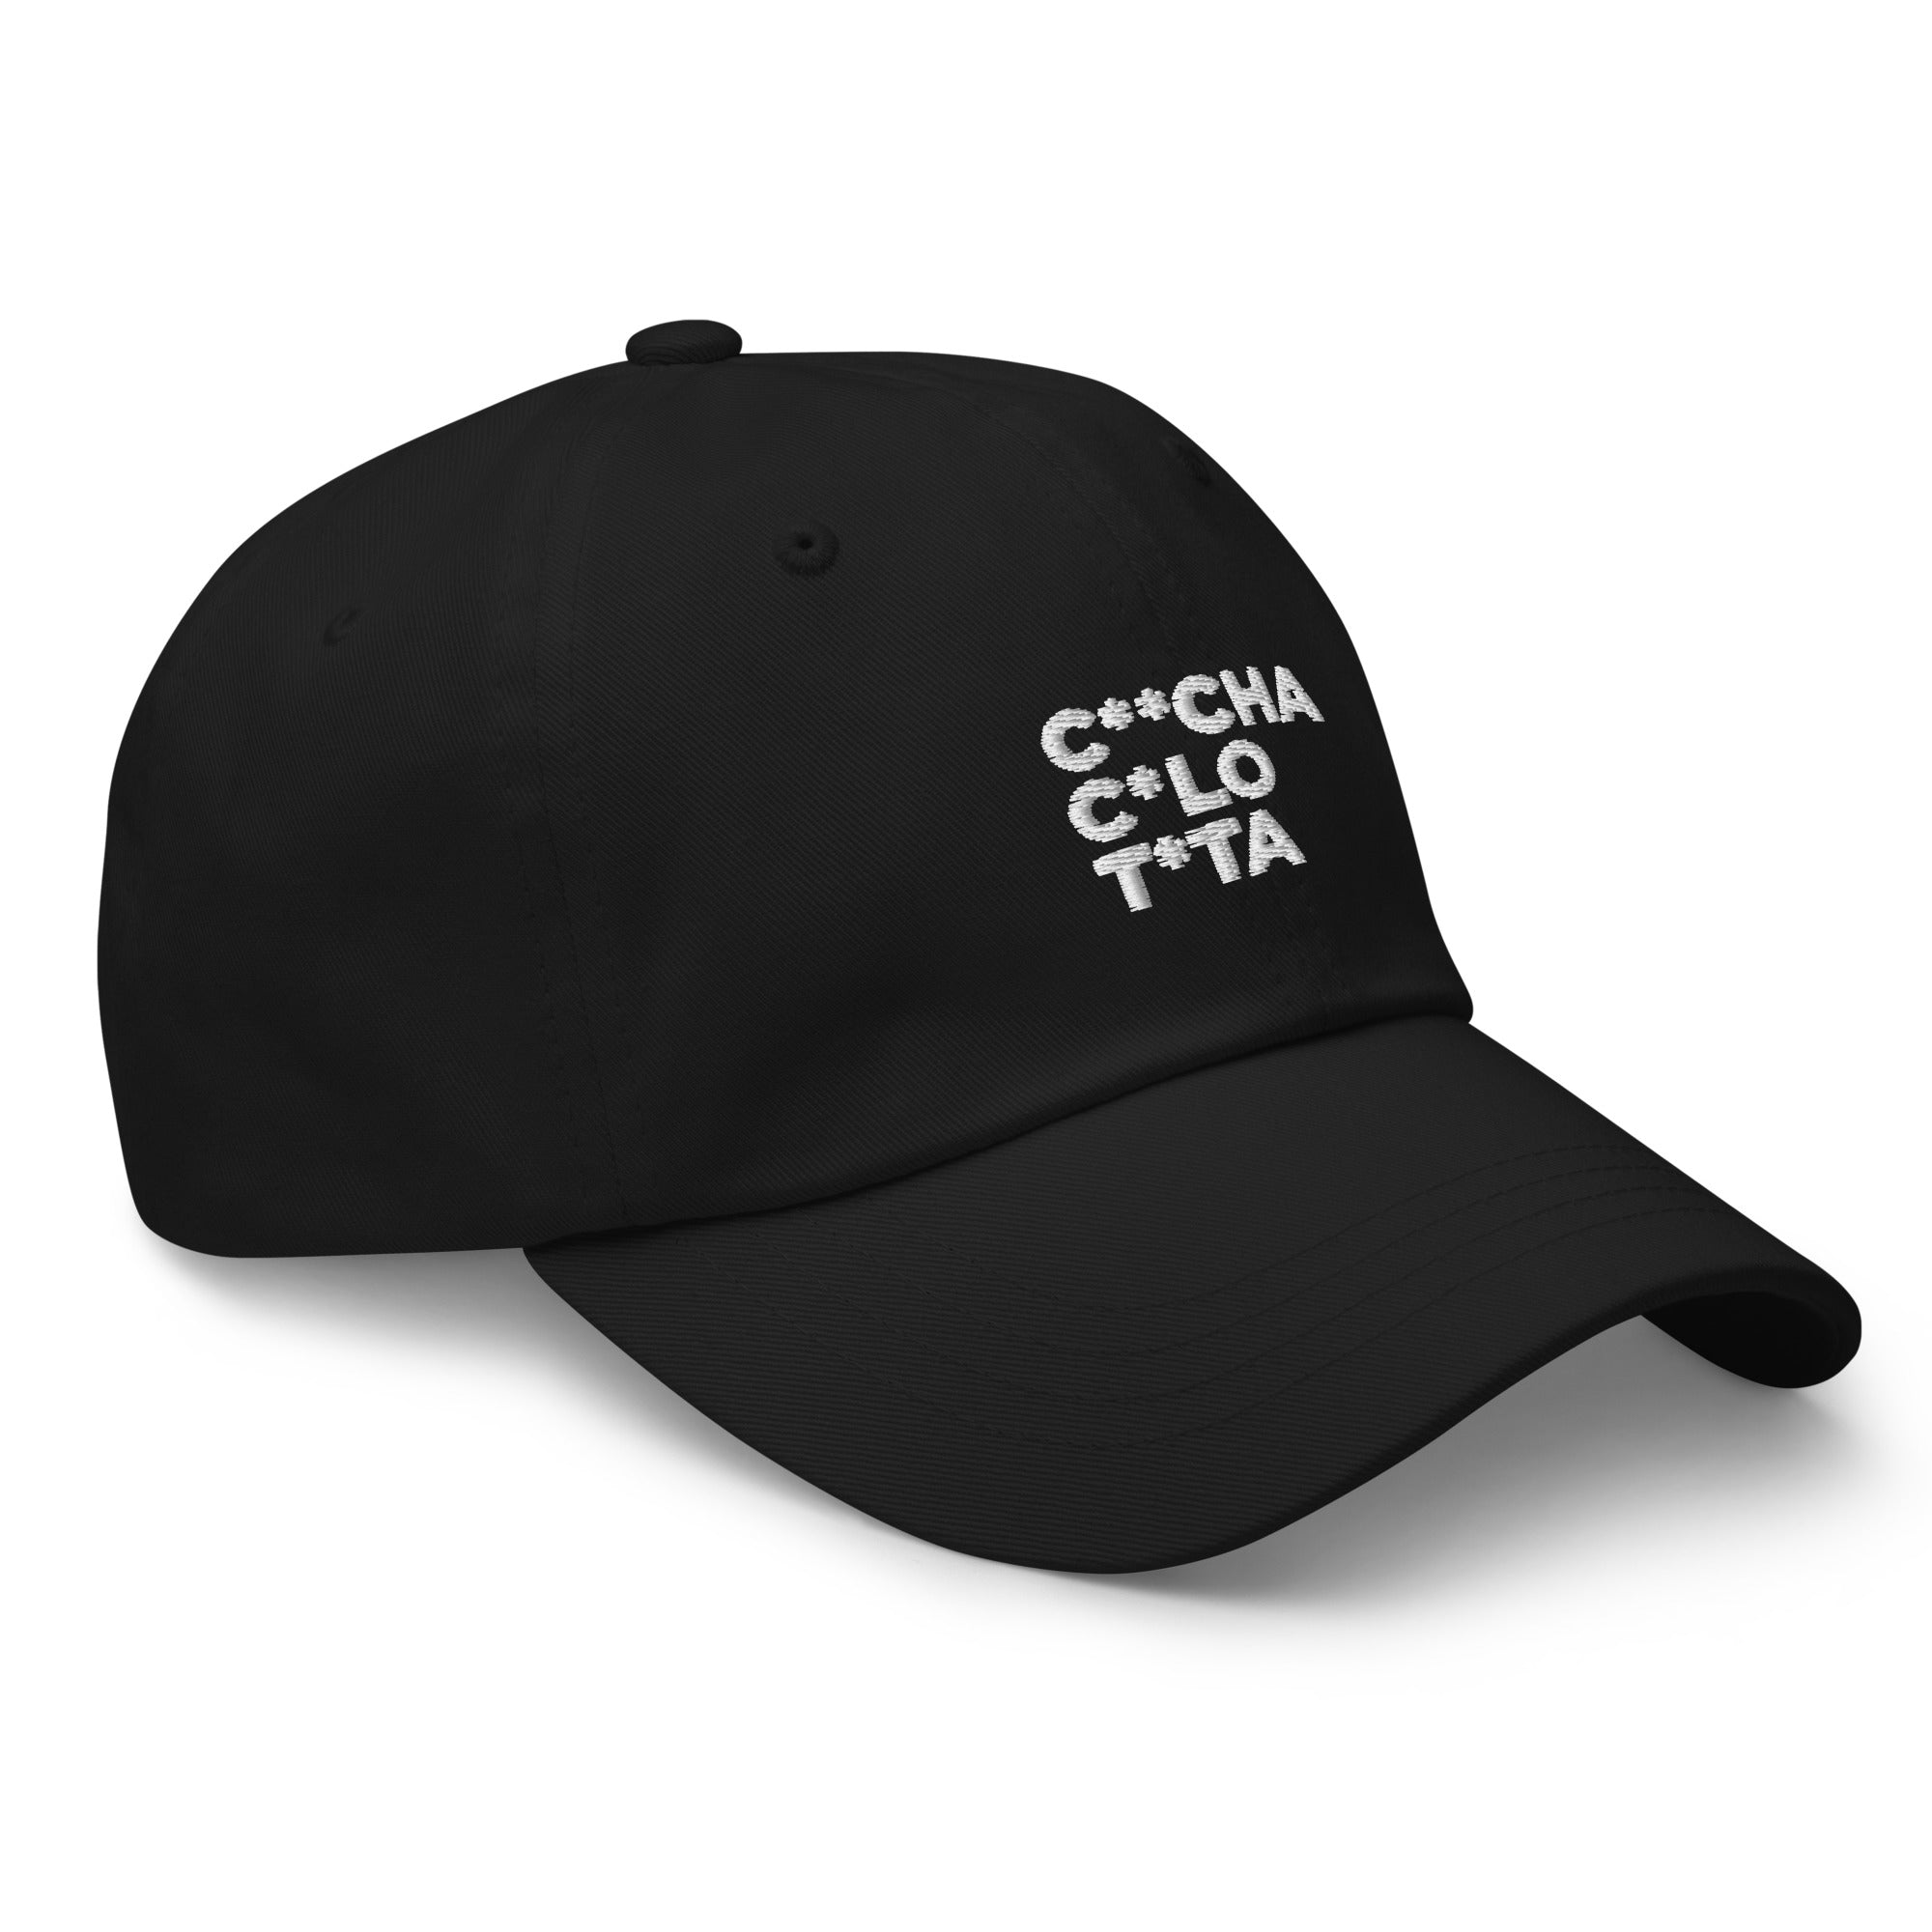 LA COMBI COMPLETA Dad hat